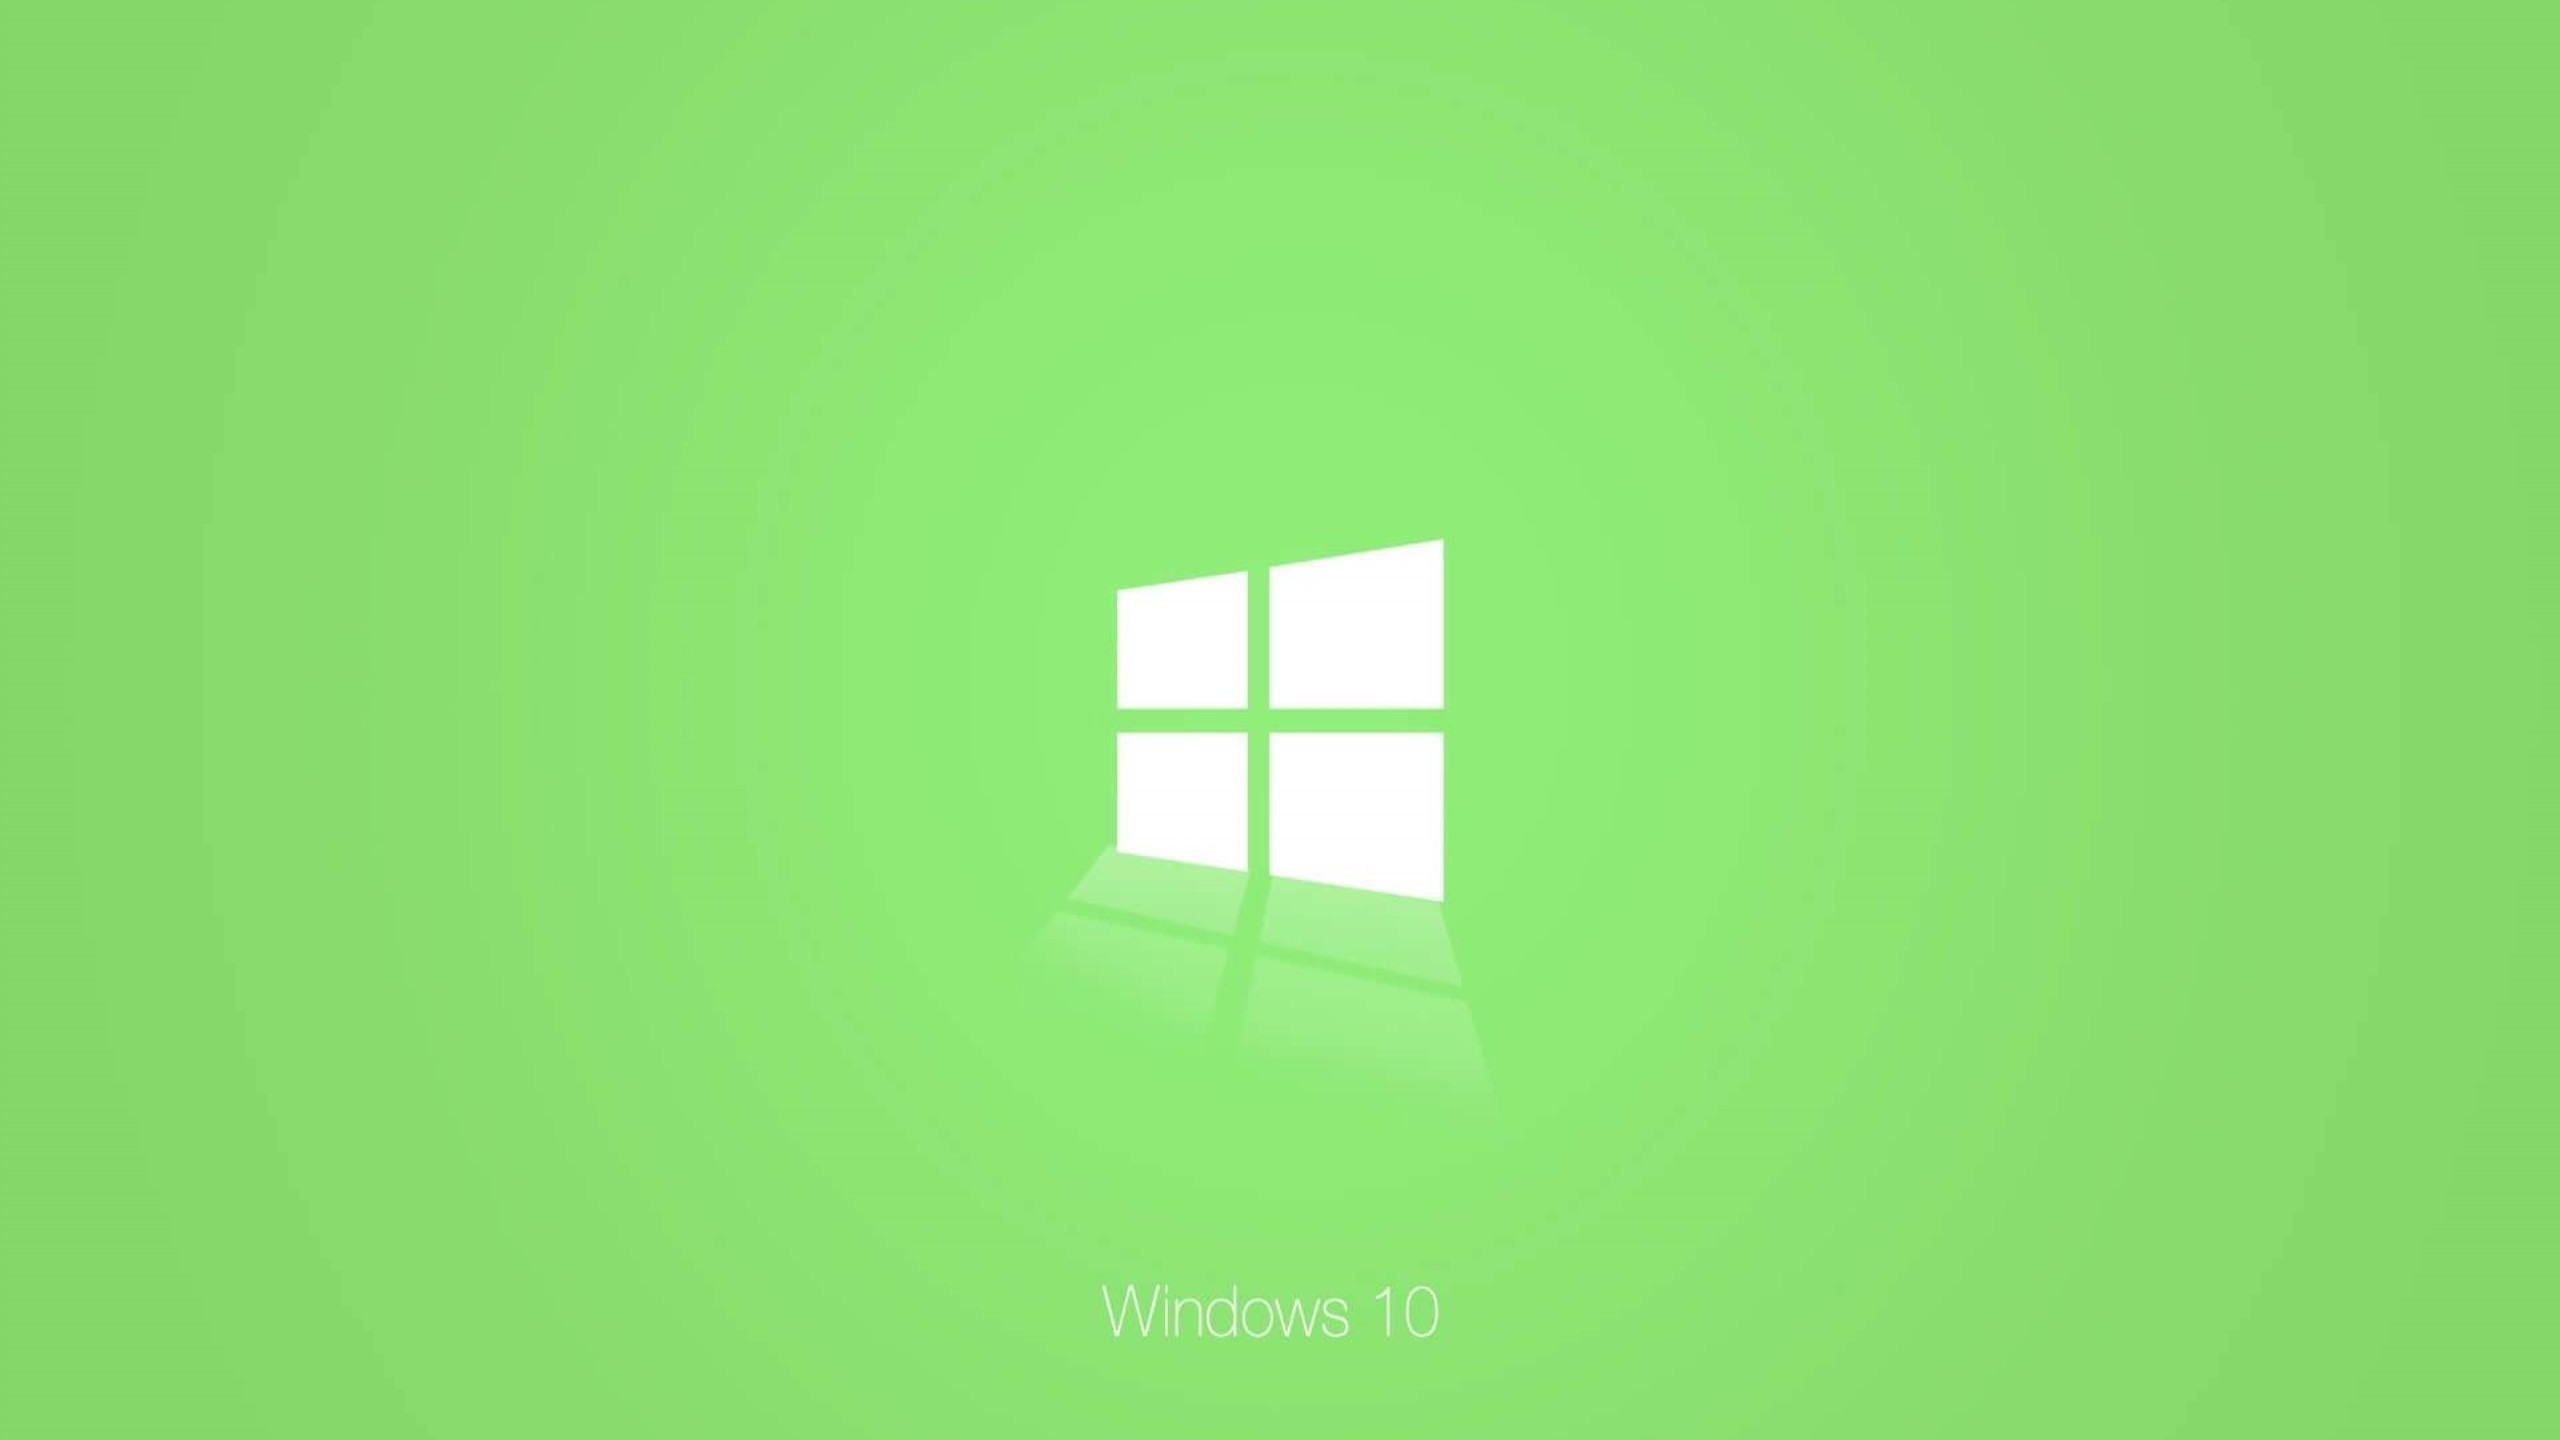 Windows 10 Green HD Wallpaper